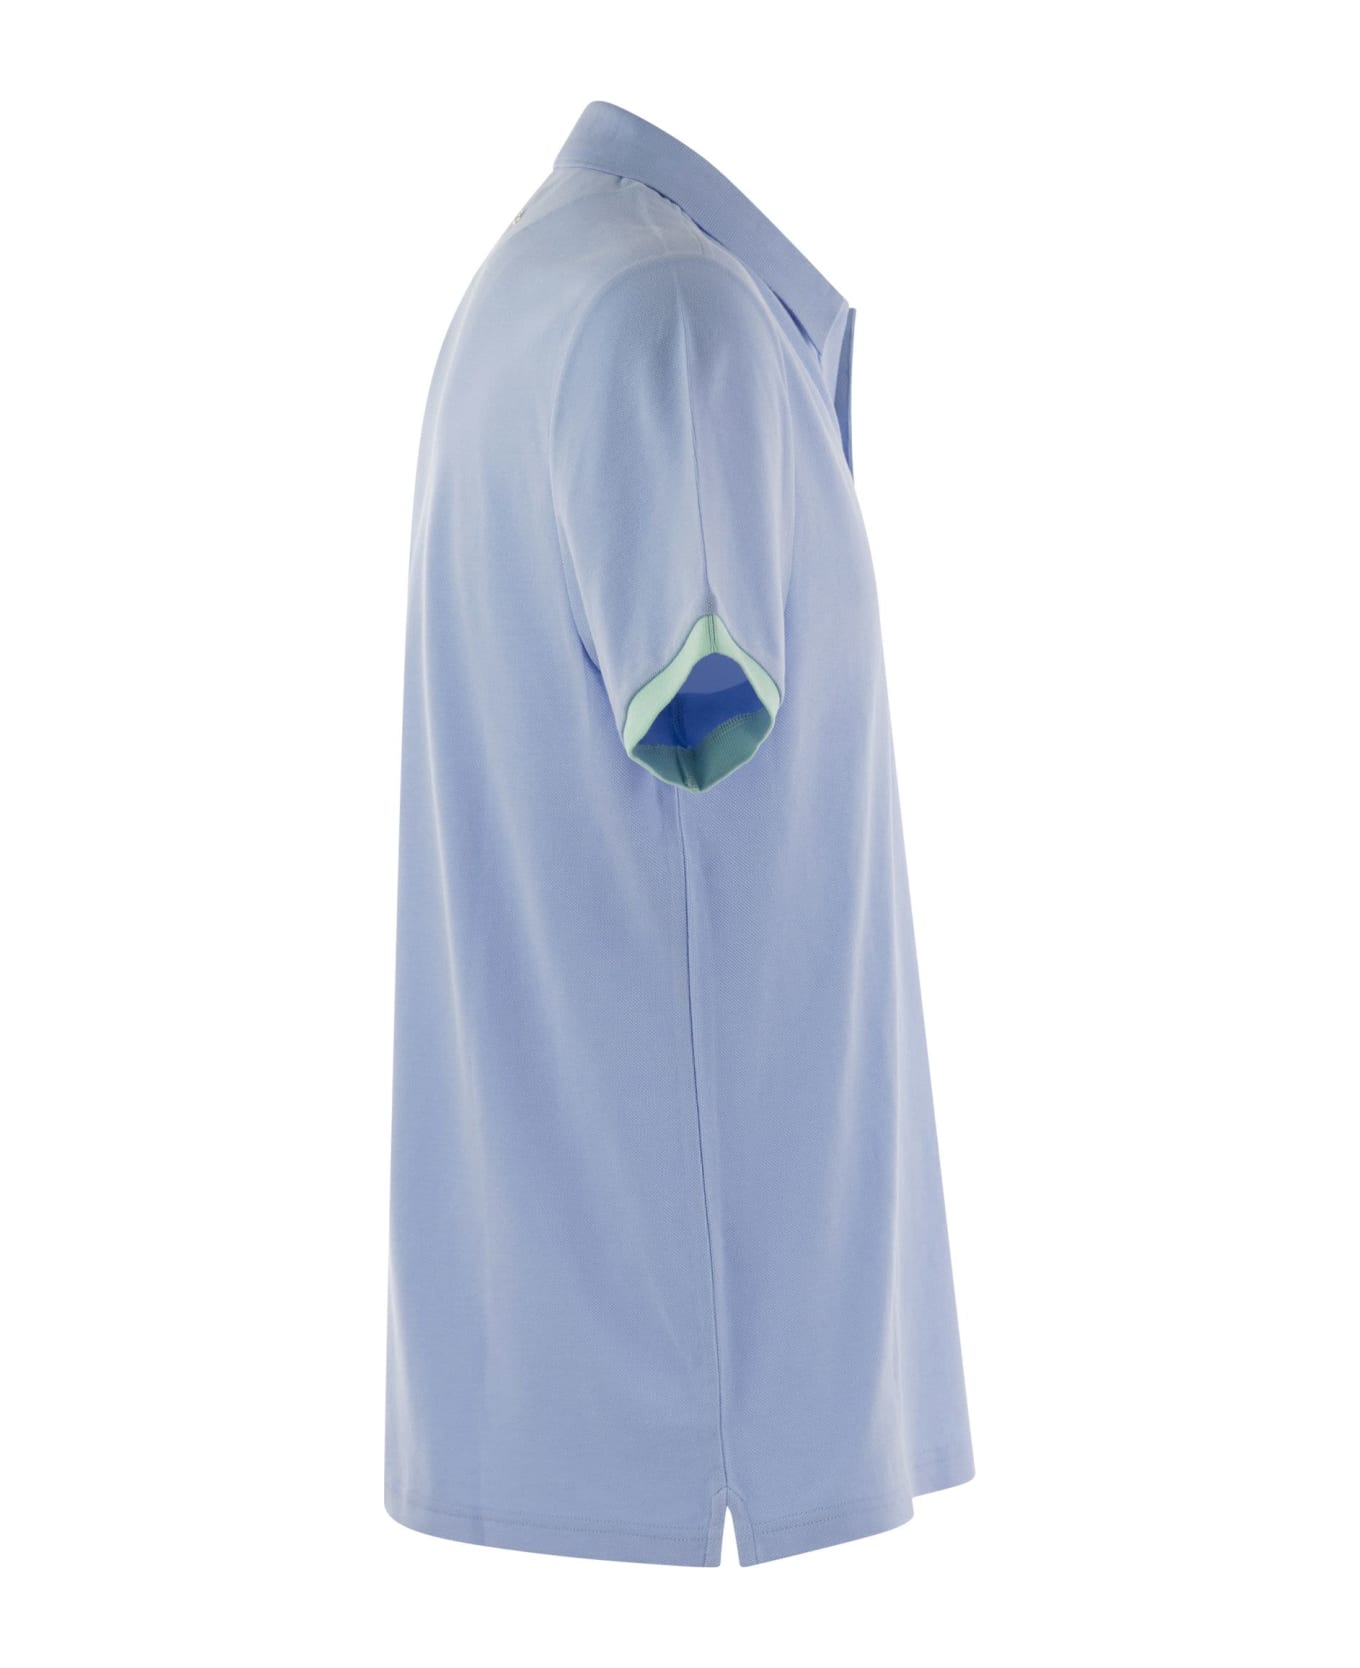 Vilebrequin Short-sleeved Cotton Polo Shirt - Light Blue